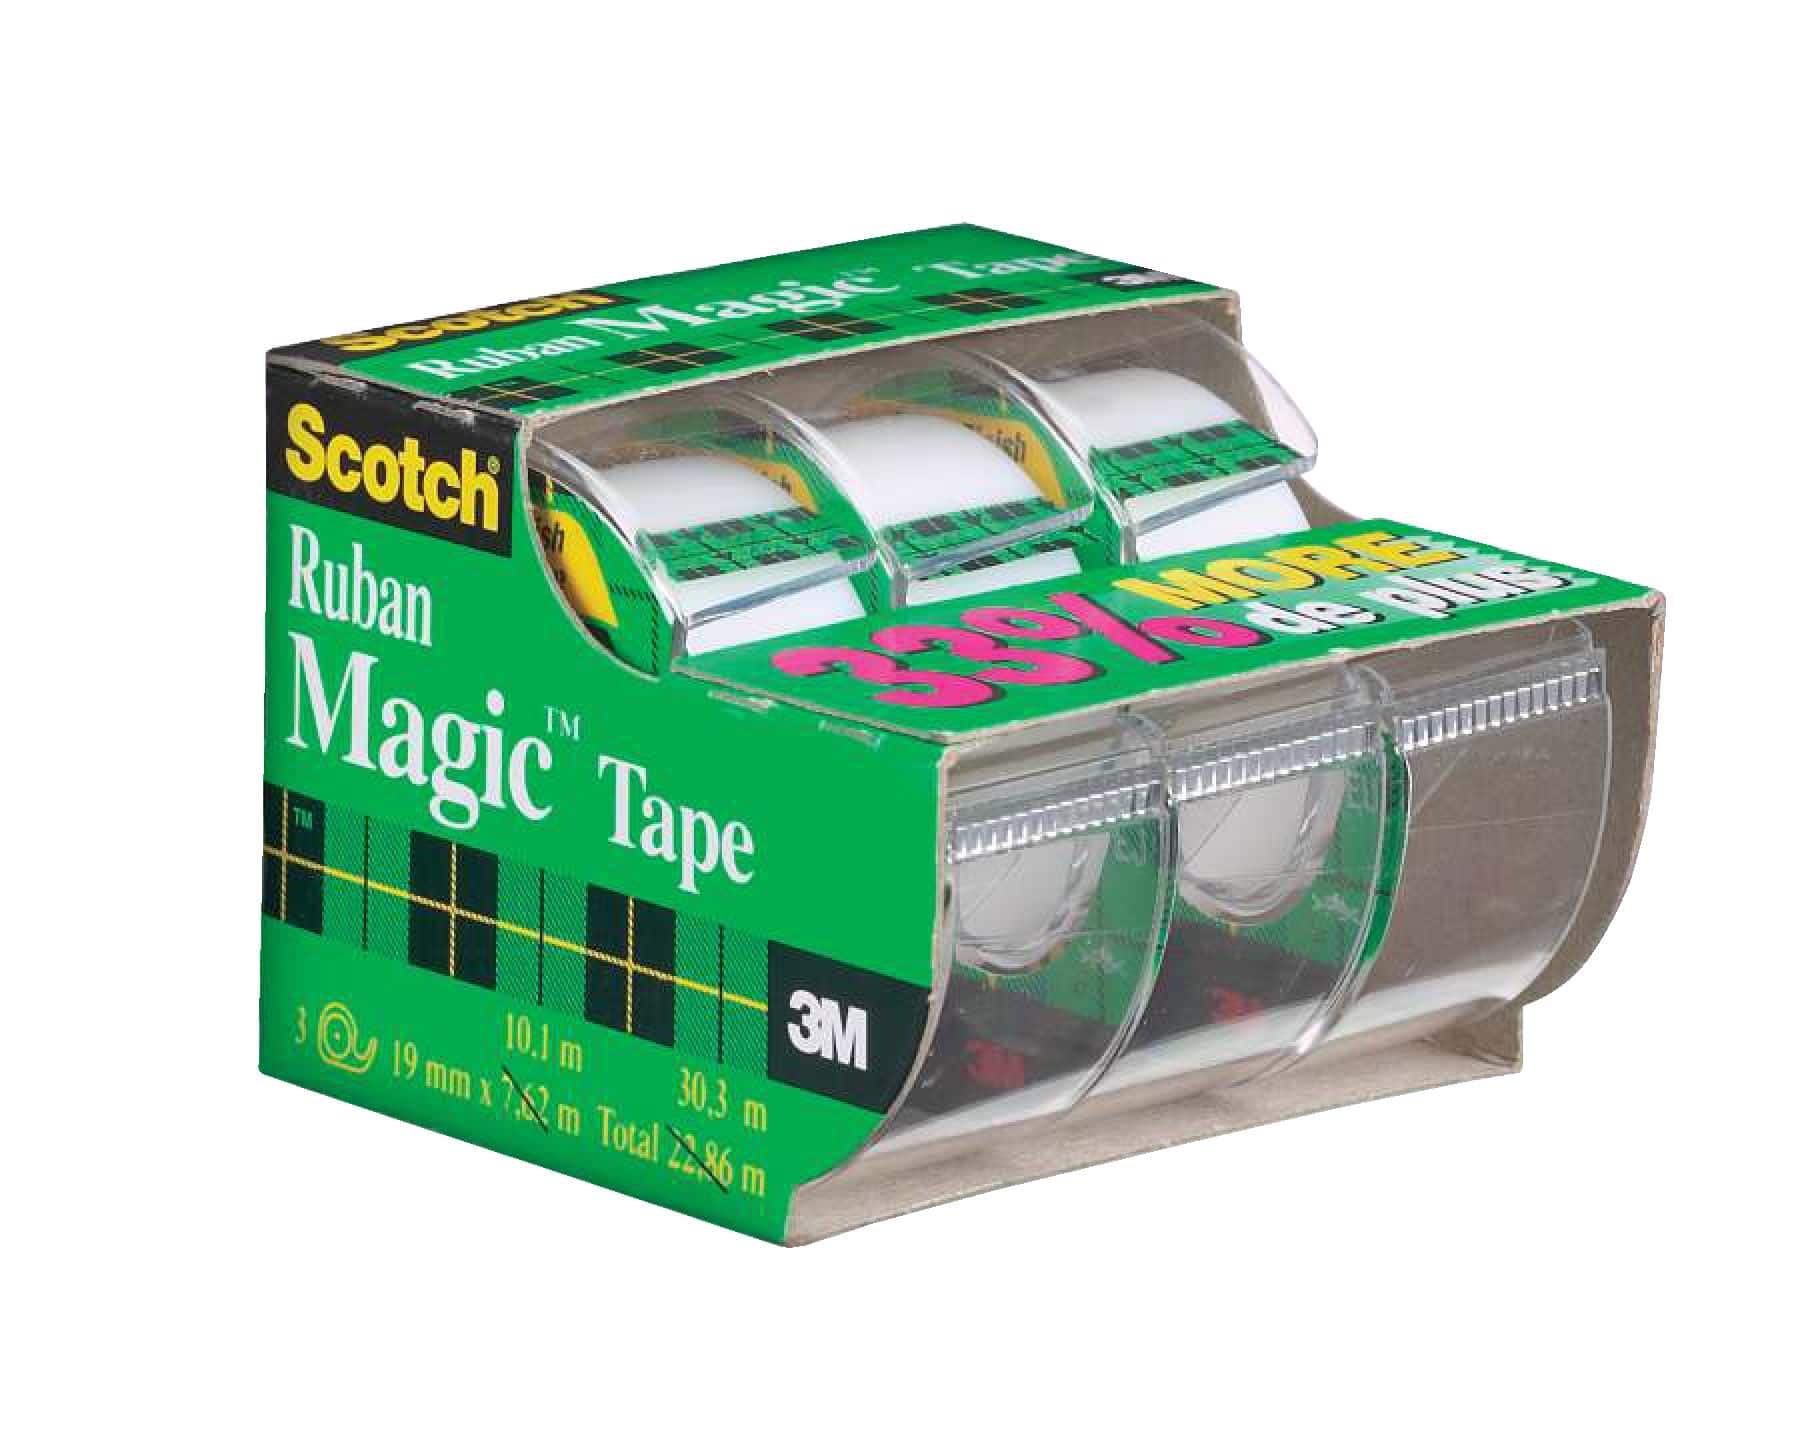 3M Scotch Magic Tape In Dispenser For Home/Office, Invisible Matte Finish,  19-mm x 10-m, 3-pk